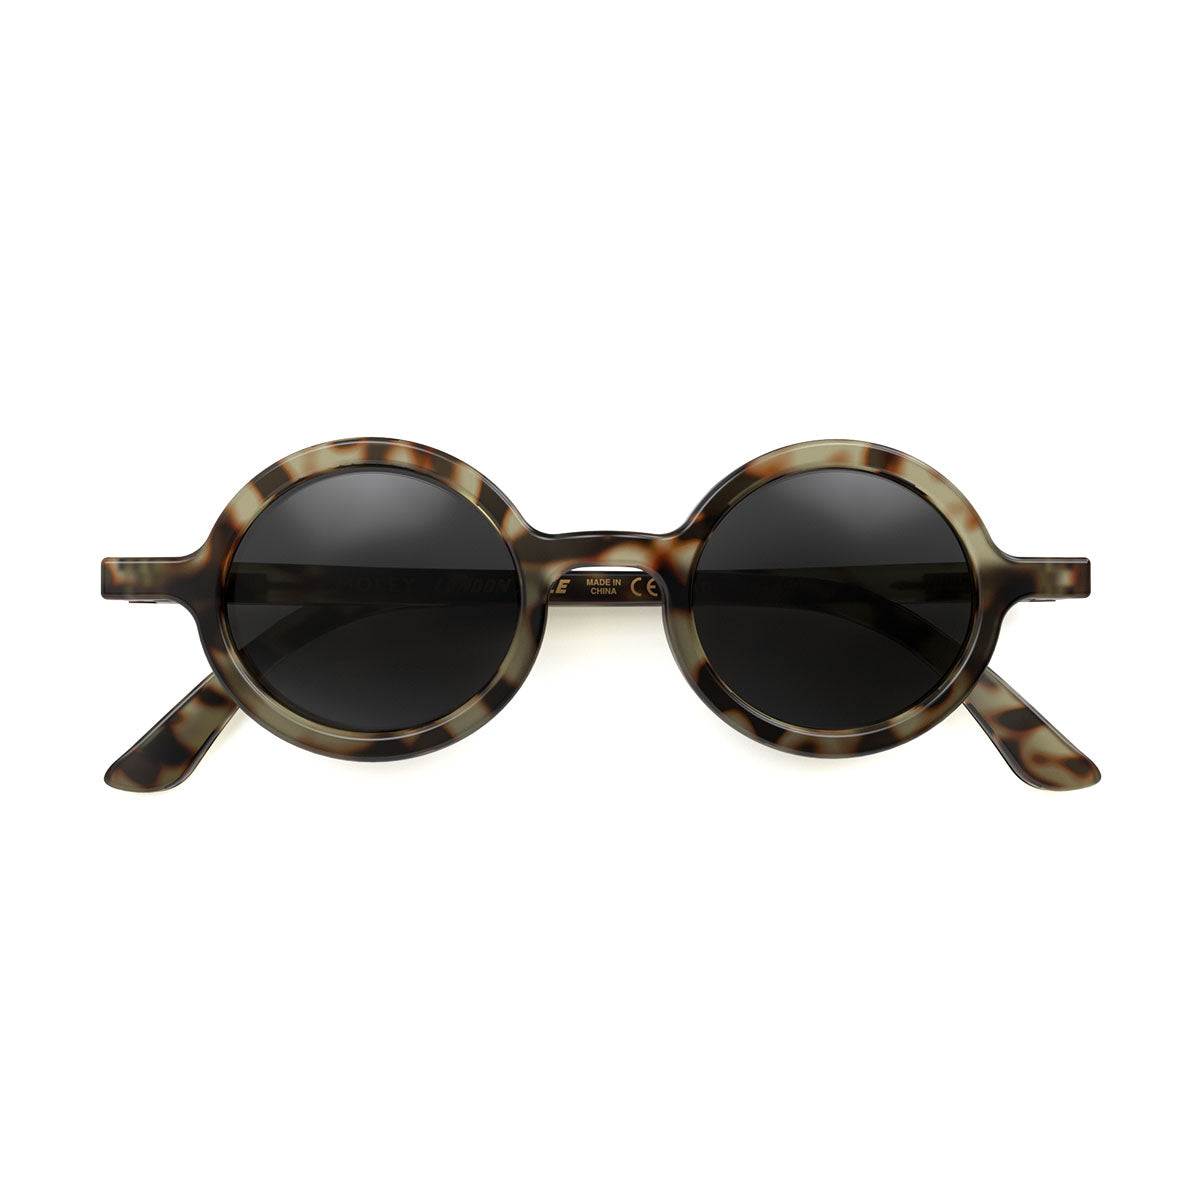 London Mole Moley Sunglasses Gloss Grey Tortoise Shell / Black LM-SMOL-GTS-K